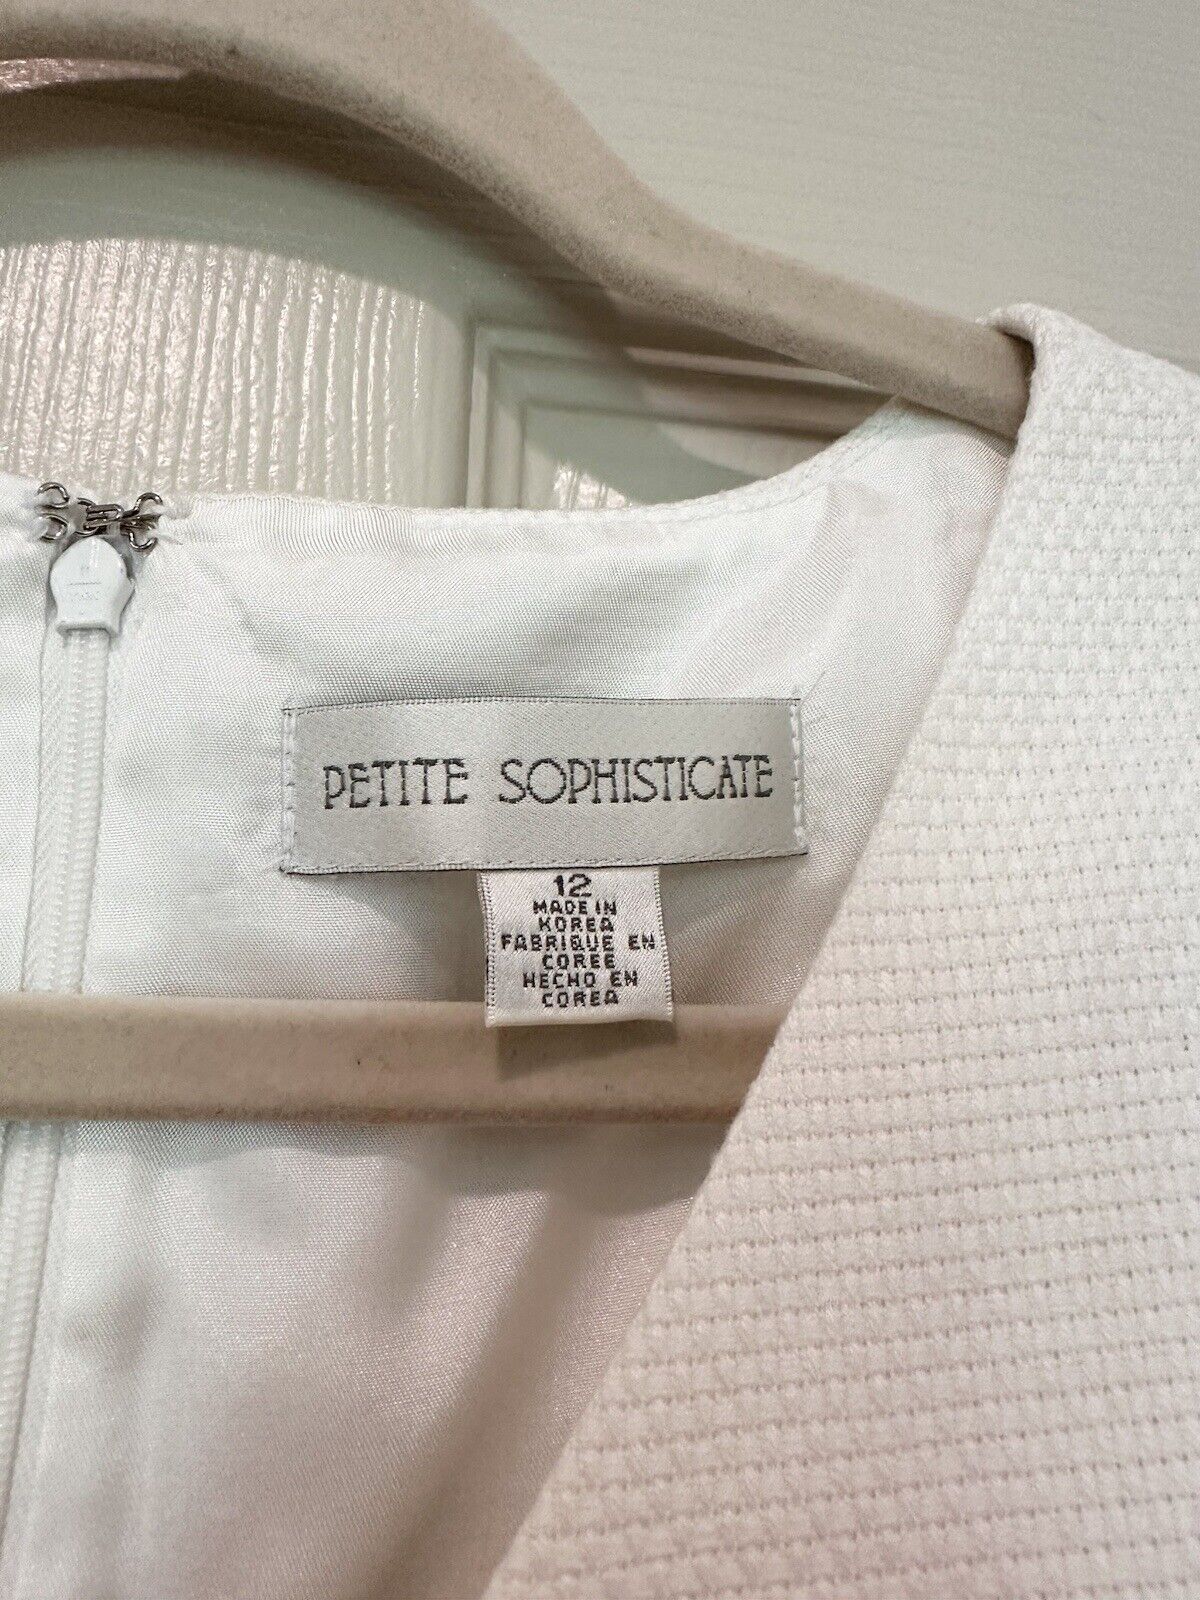 Petite Sophisticate White Dress Size 12 - image 3